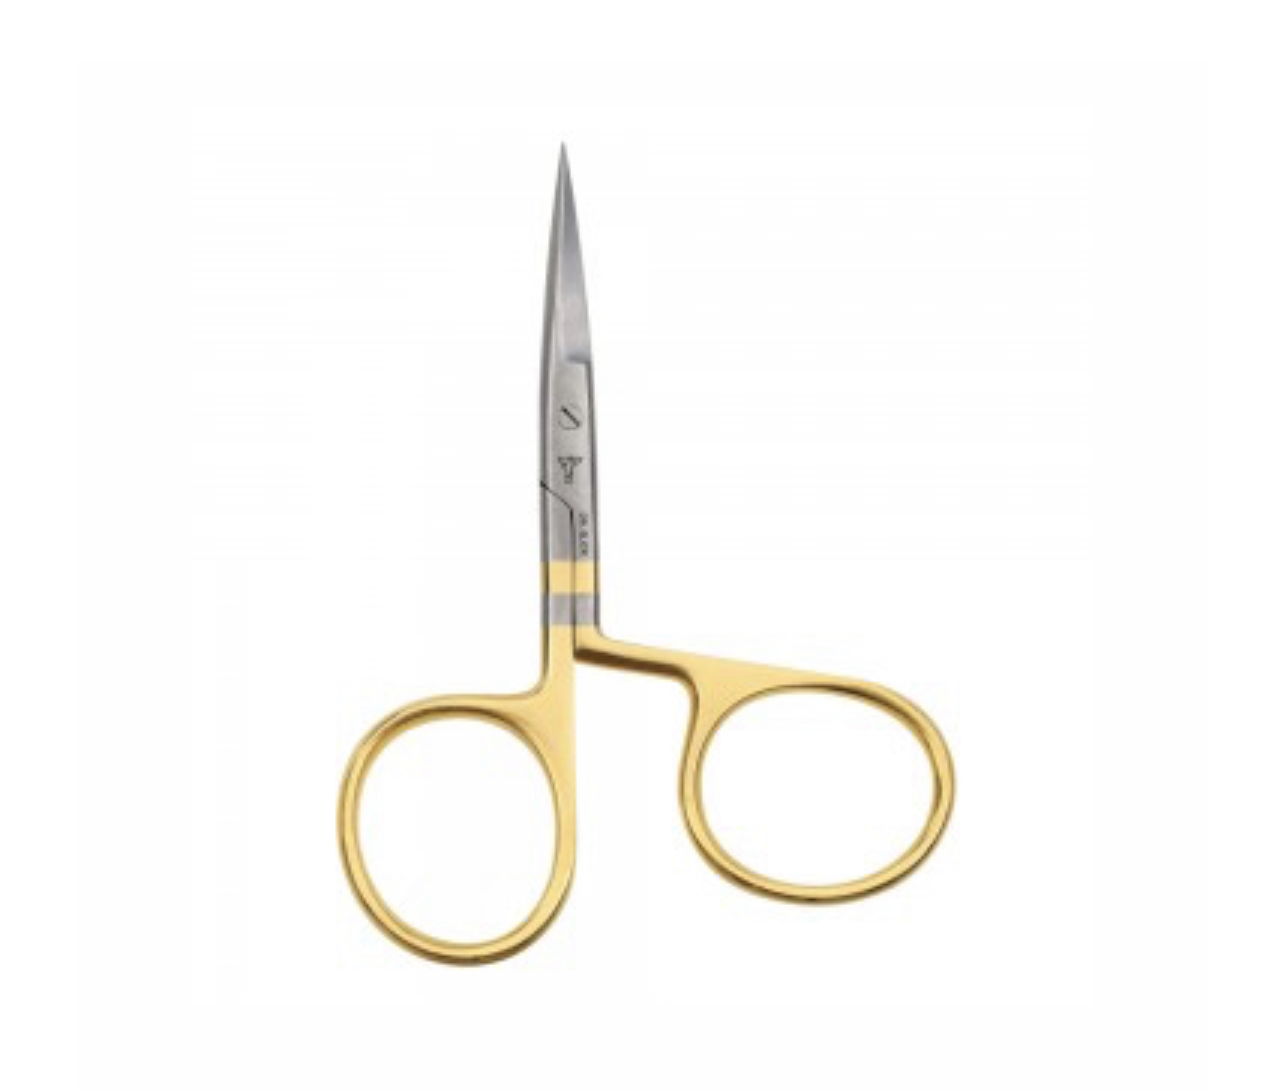 Dr. Slick Twisted Loop Scissors - All Purpose 4